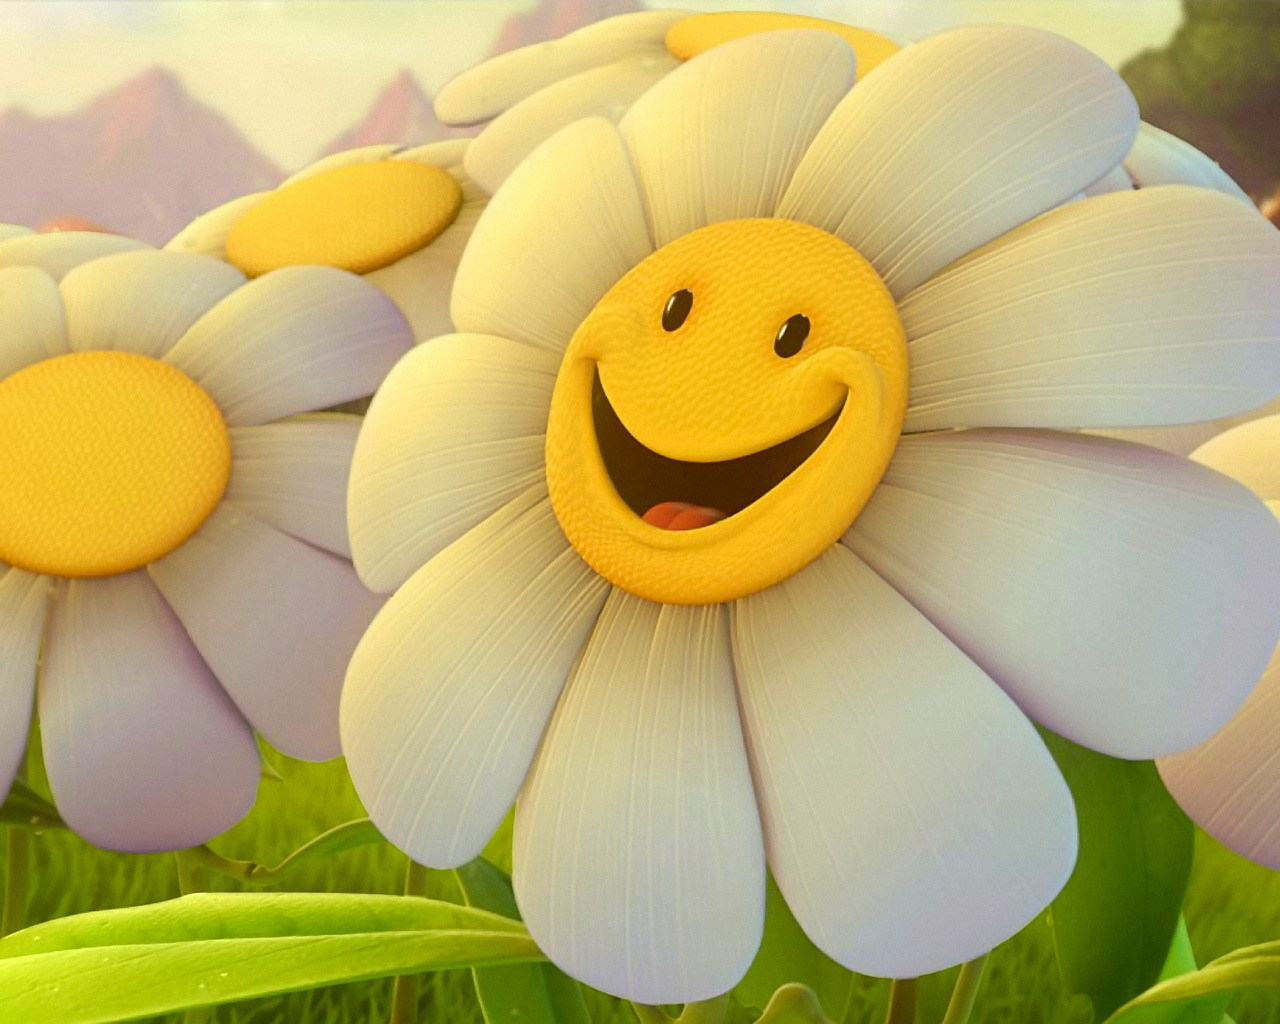 Smile - KEEP SMILING Wallpaper (11813858) - Fanpop